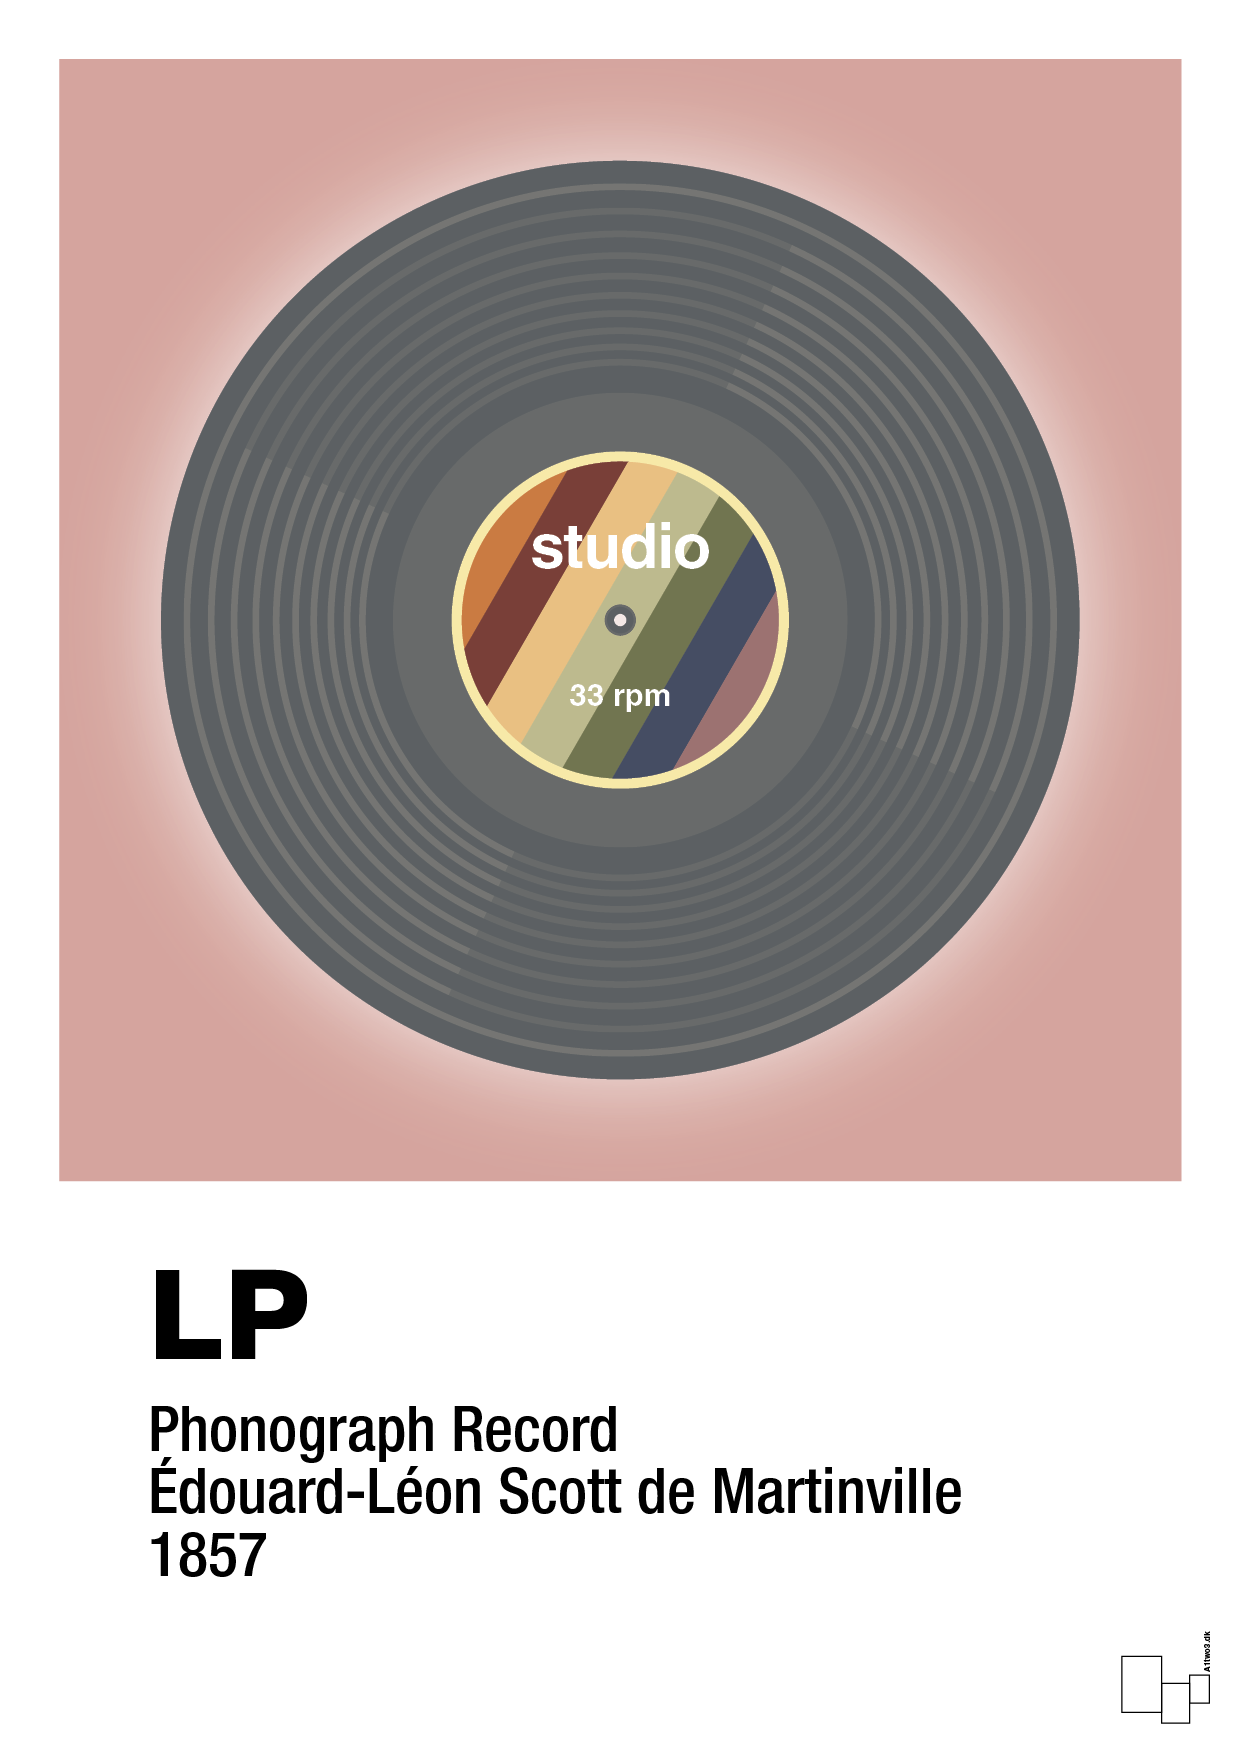 vinylplade 33rpm - Plakat med Grafik i Bubble Shell